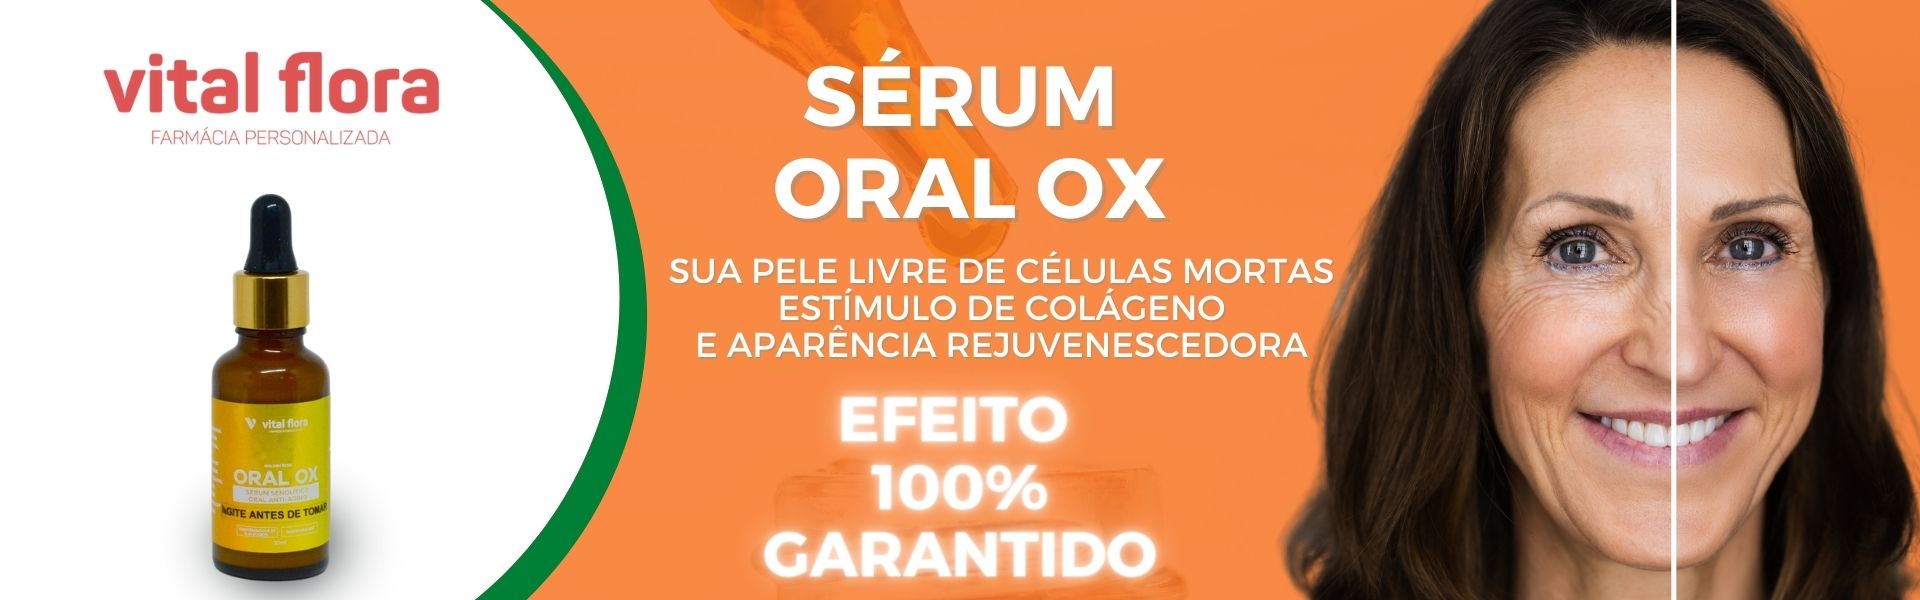 sérum-anti-ox-vital-flora-1